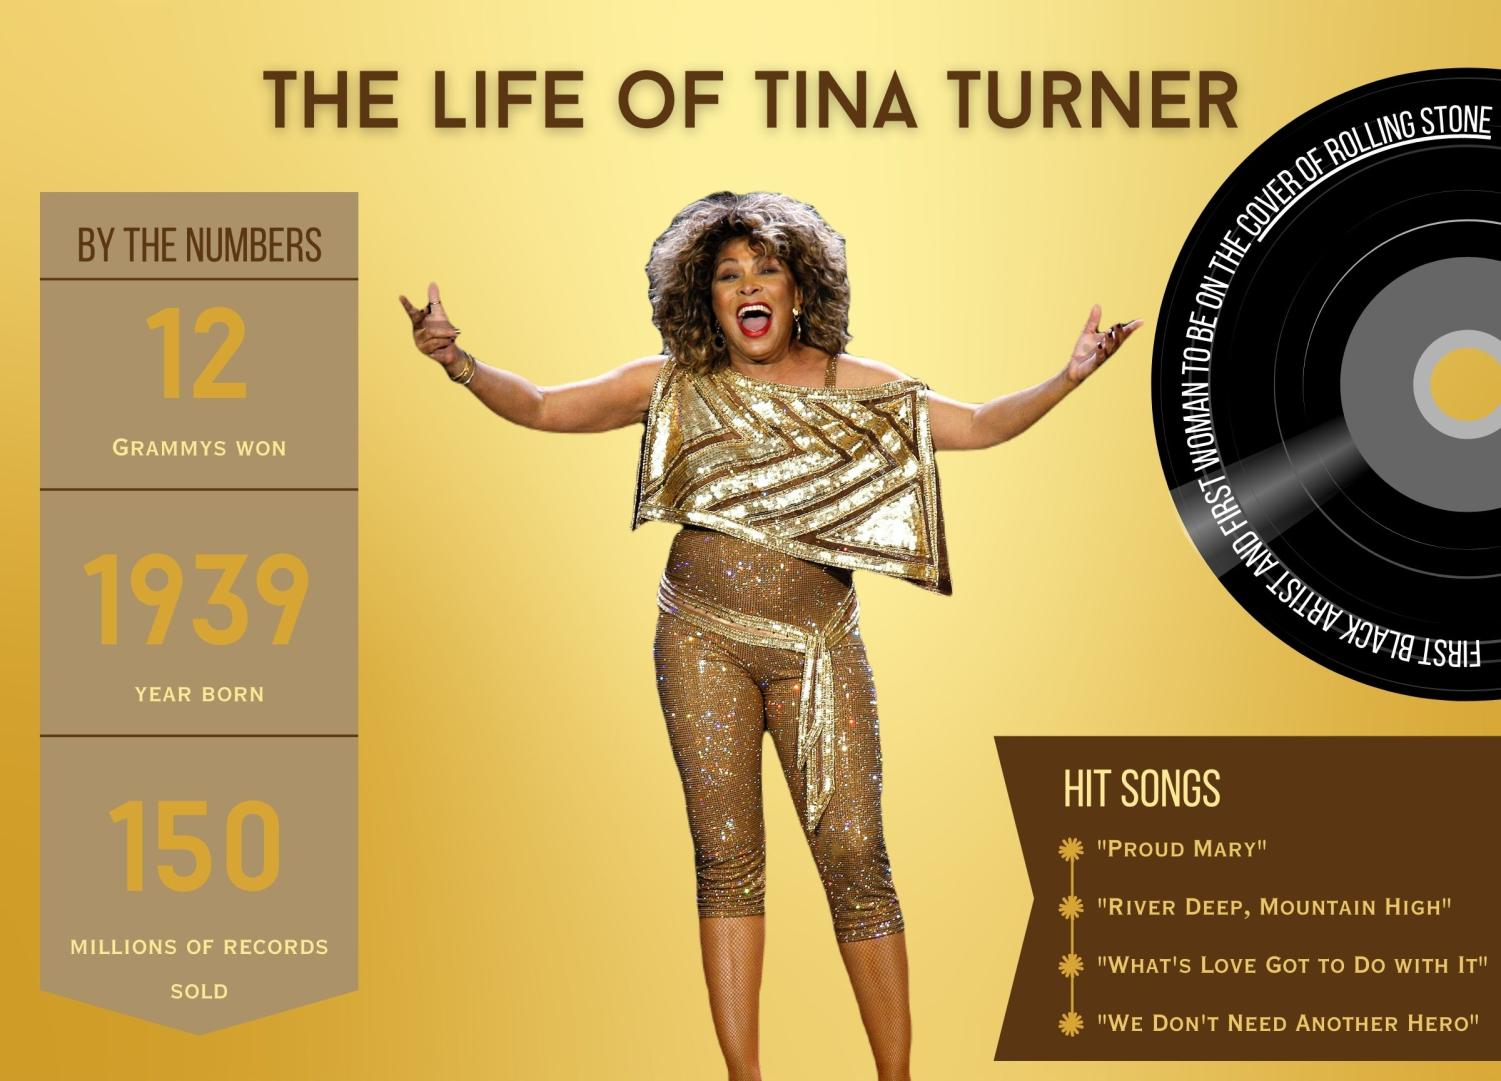 Infographic on life of Tina Turner